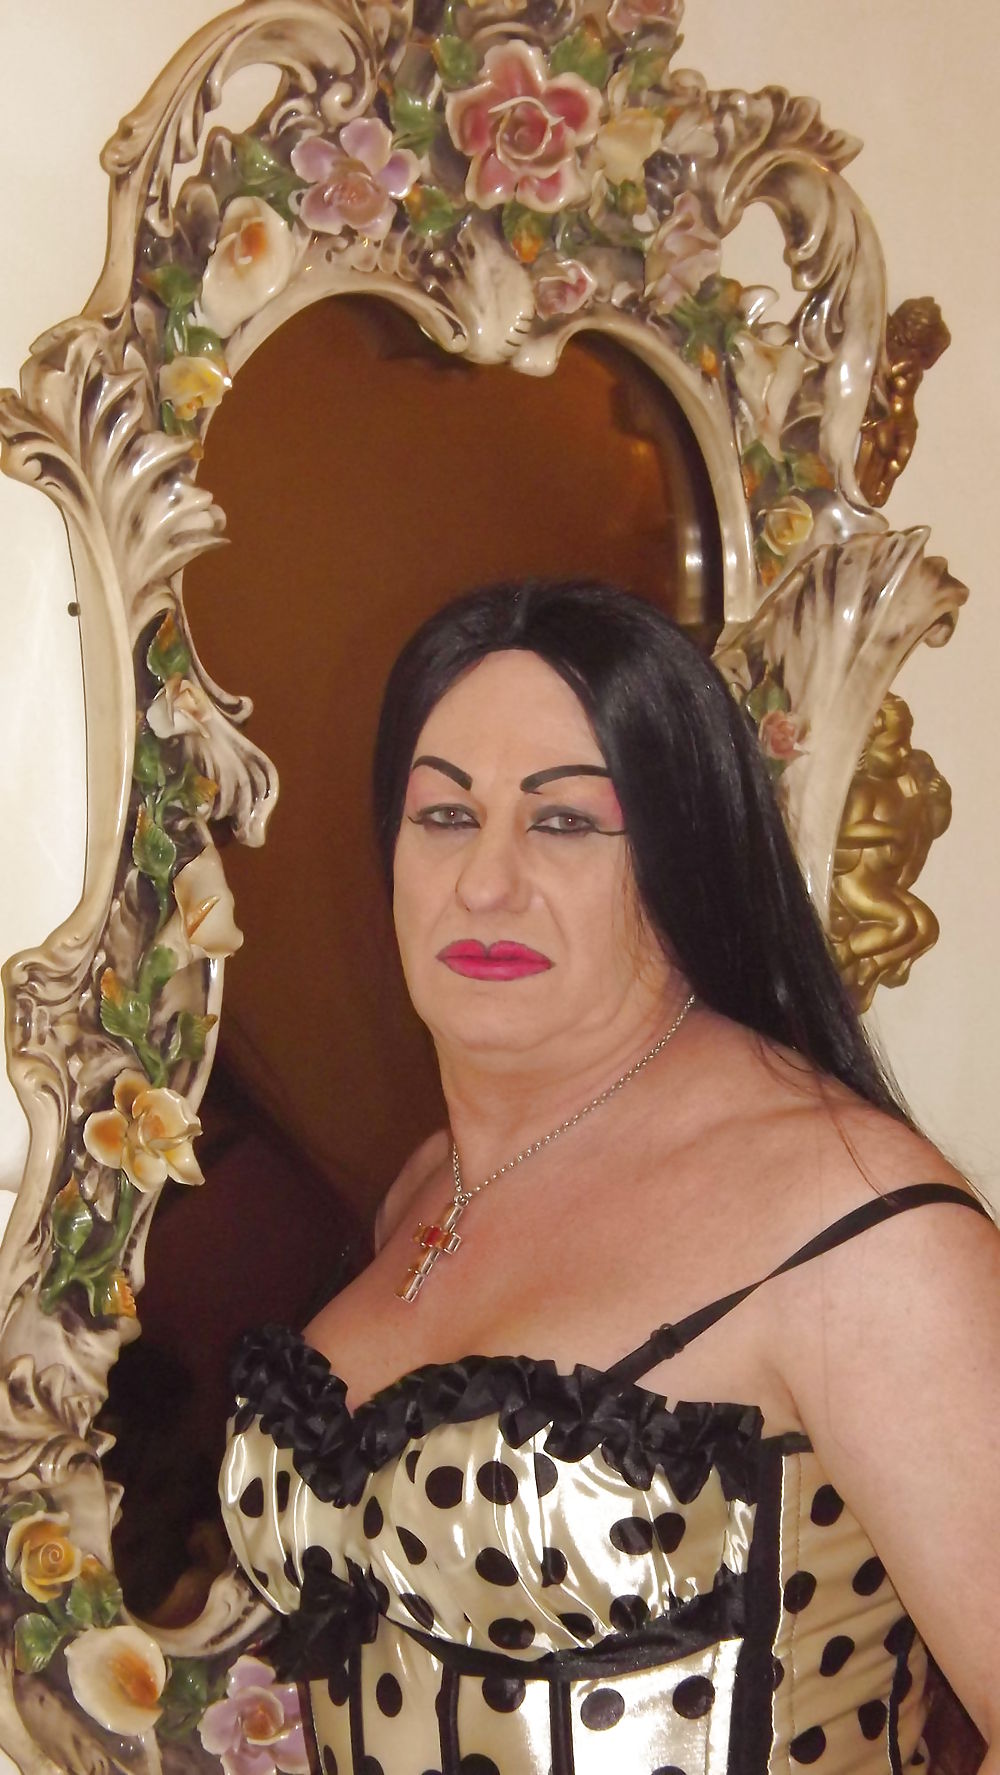 Franseska Transvestiten Schönheit Korsett #16695111